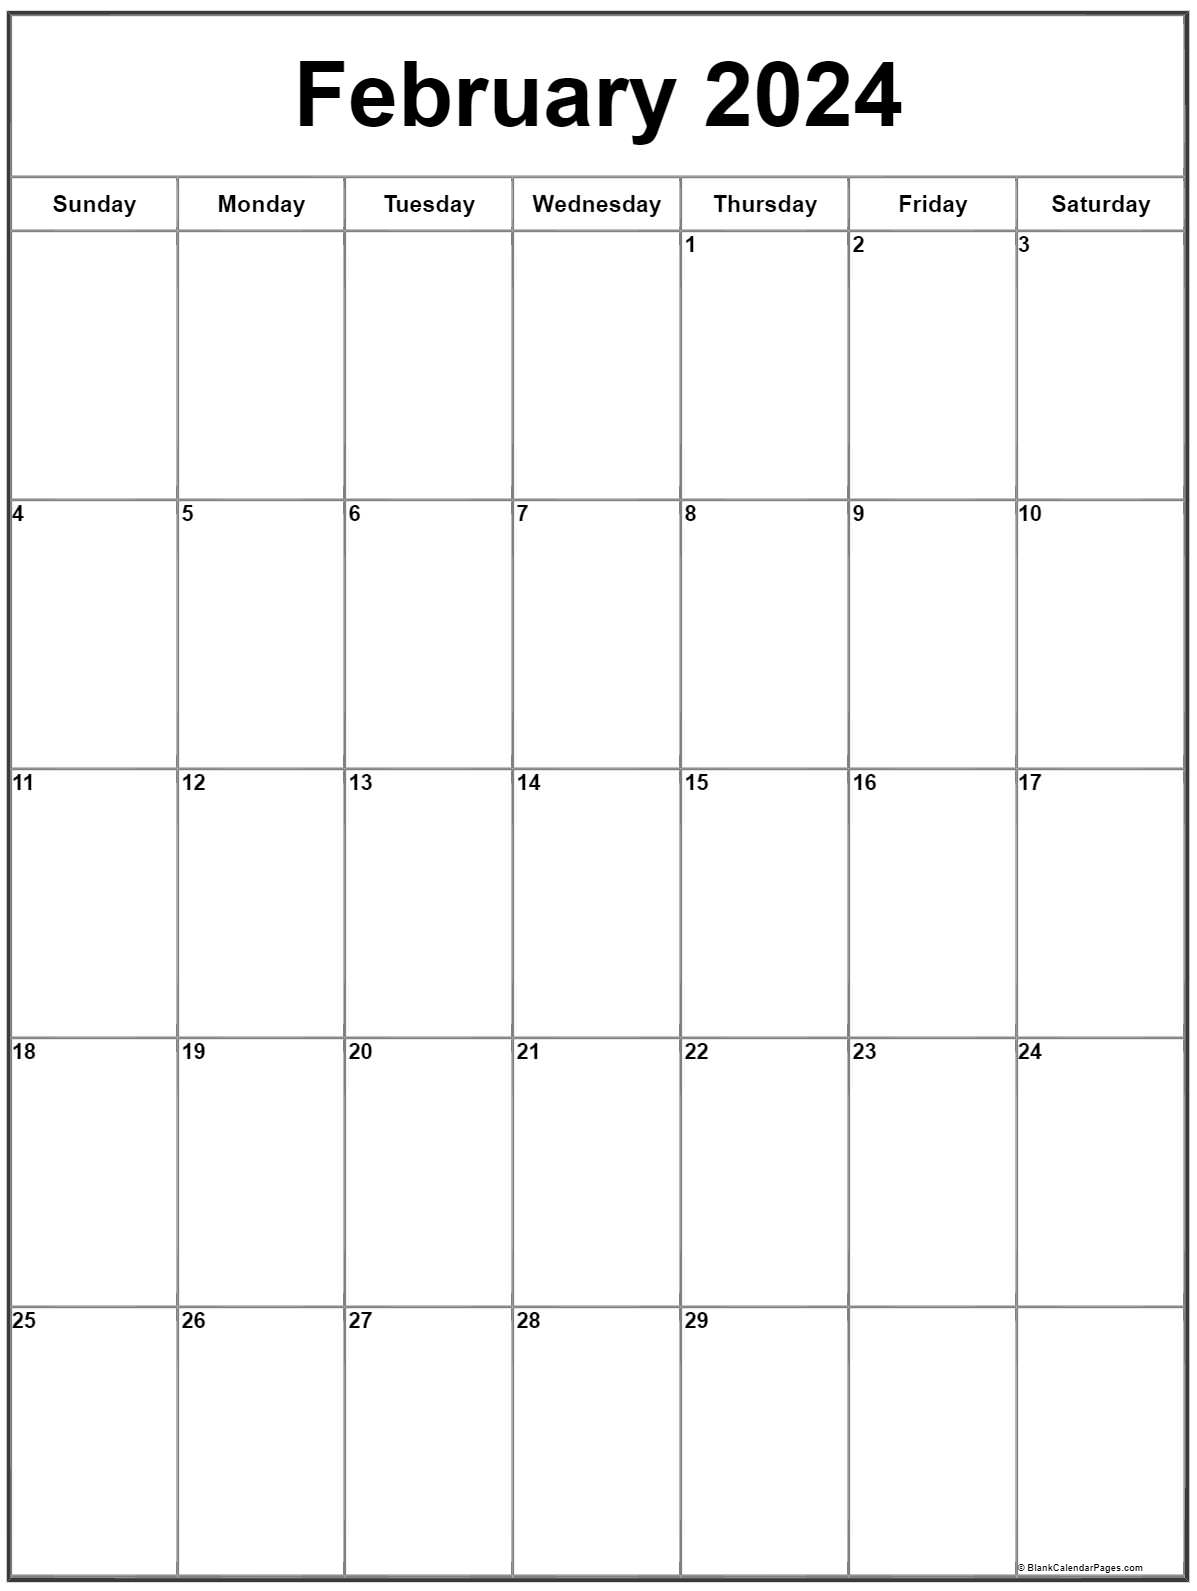 February 2022 Calendar Vertical February 2022 Vertical Calendar | Portrait